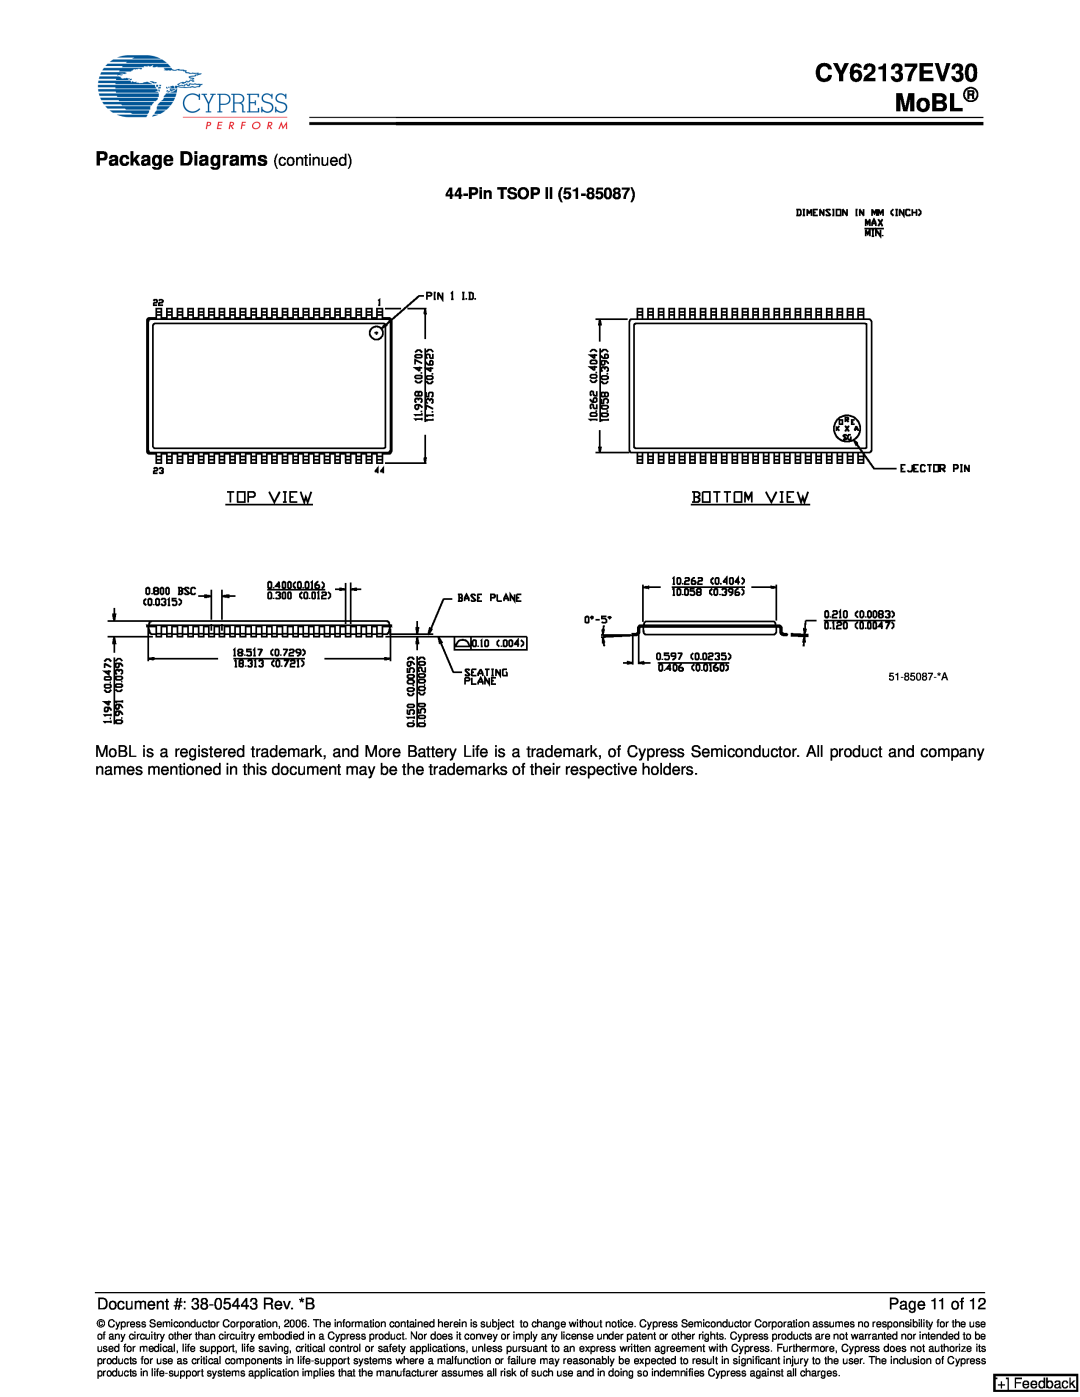 Cypress manual Package Diagrams continued, CY62137EV30 MoBL, Pin TSOP II, + Feedback 